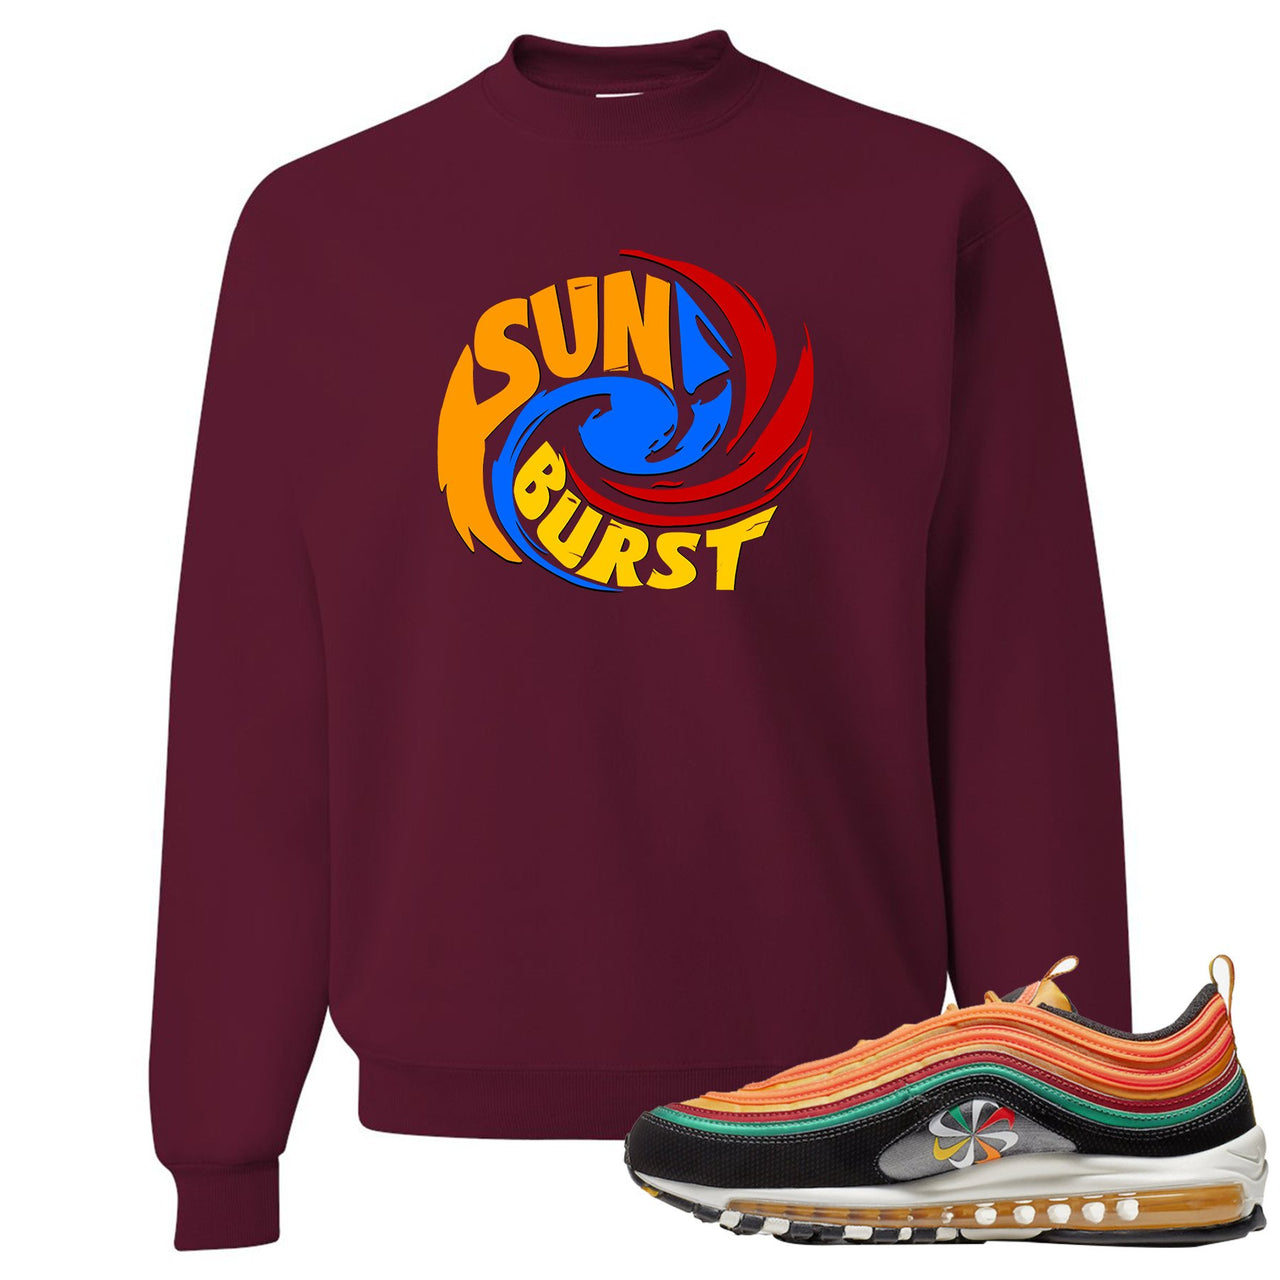 Printed on the front of the Air Max 97 Sunburst maroon sneaker matching crewneck sweatshirt is the Sunburst Hurricane